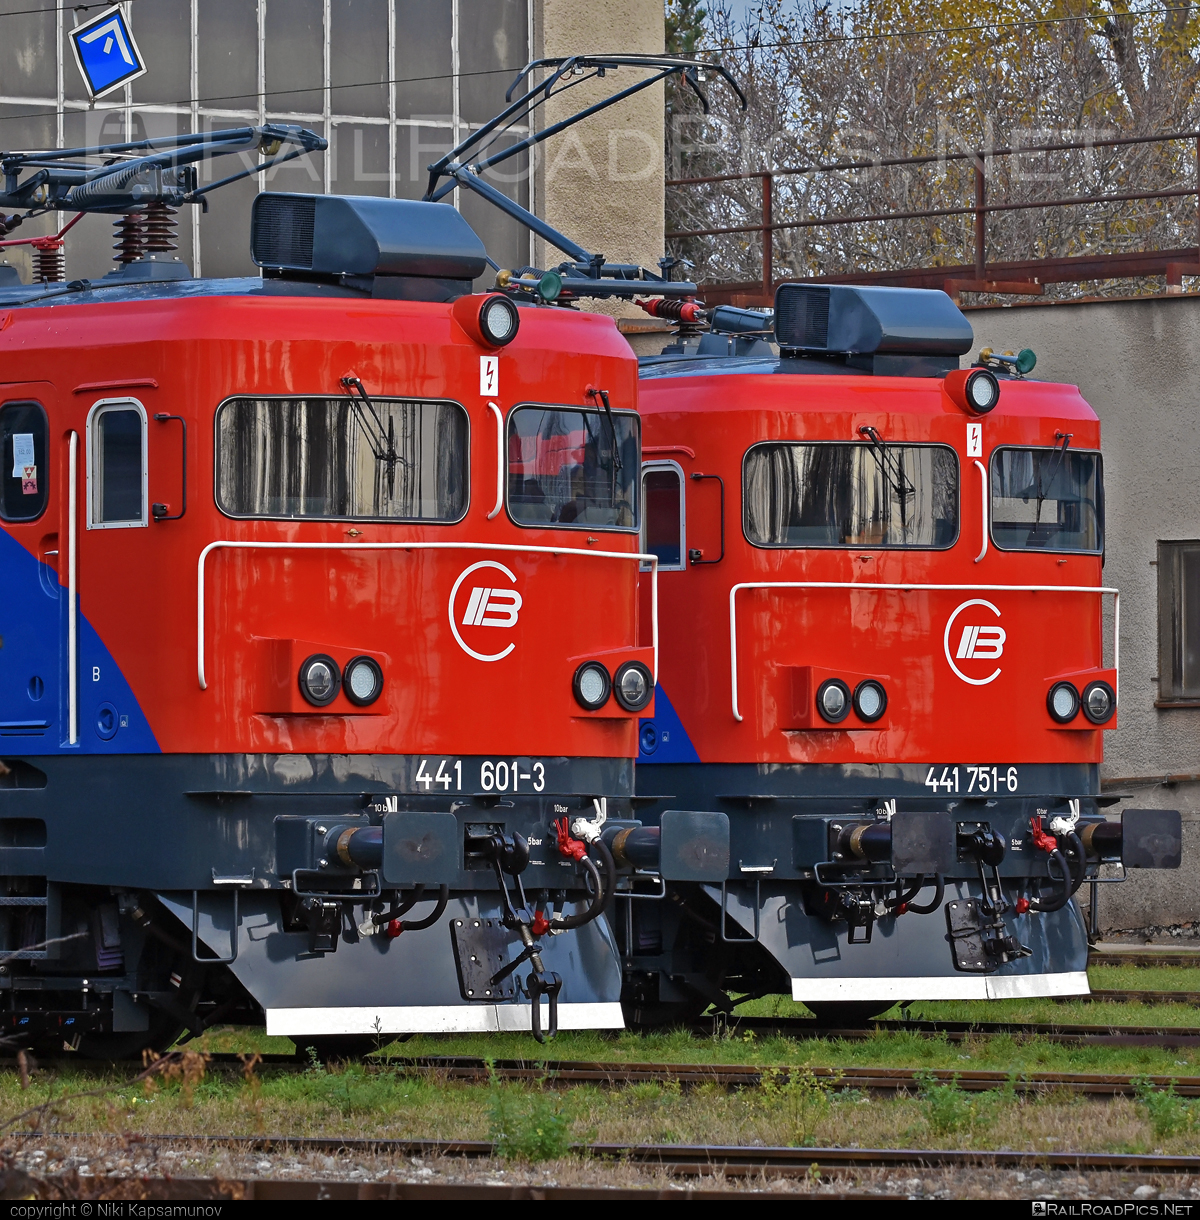 Končar JŽ class 441 - 441 601-3 operated by Srbija voz a.d. #jz441 #koncar #koncar441 #srbijavoz #srbijavozad